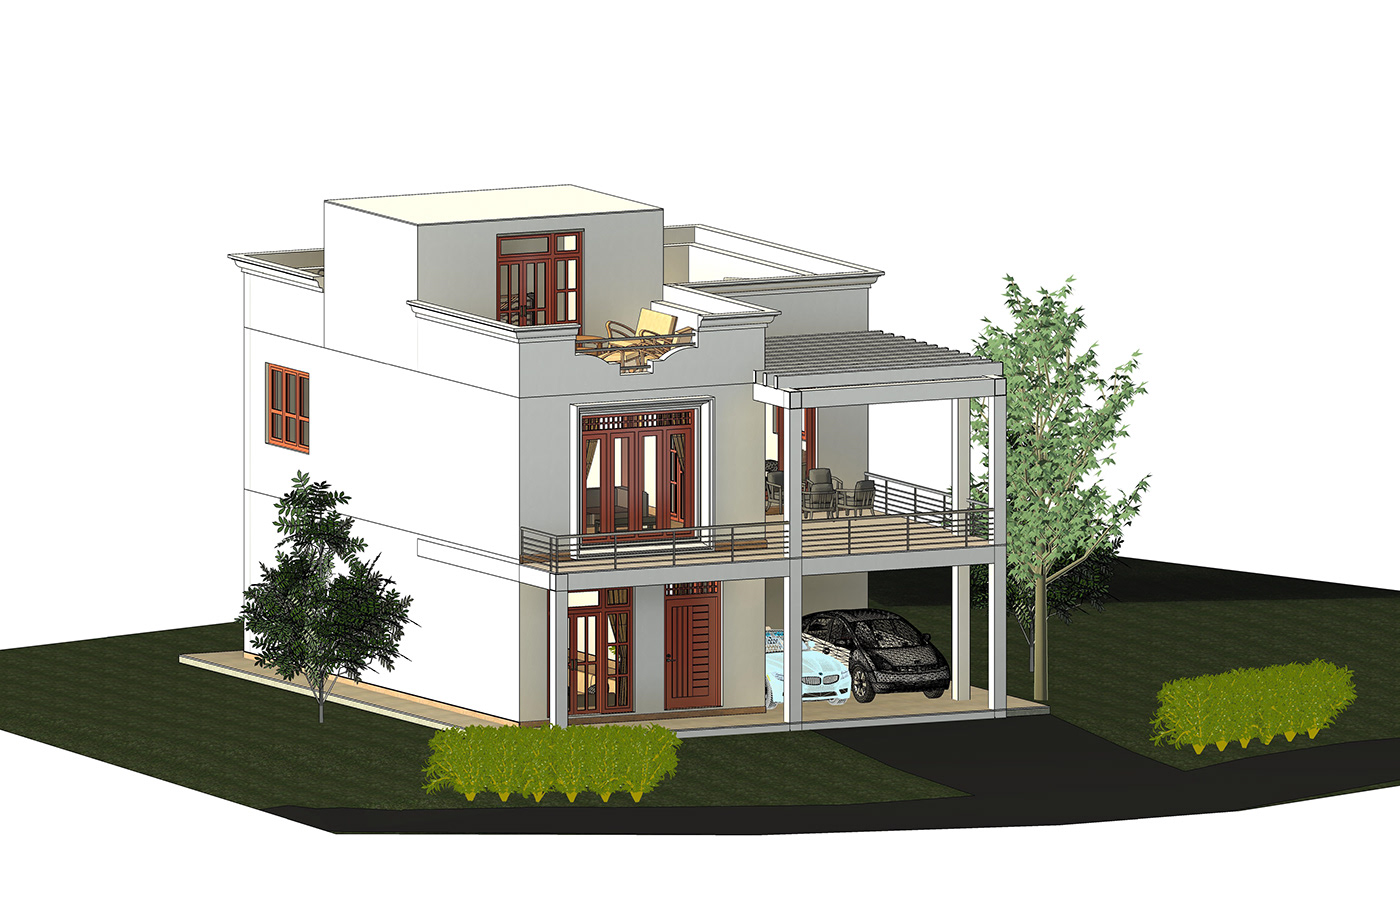 architecture architect Revit Architecture 3D visualization modern exterior model BIM bim modeling